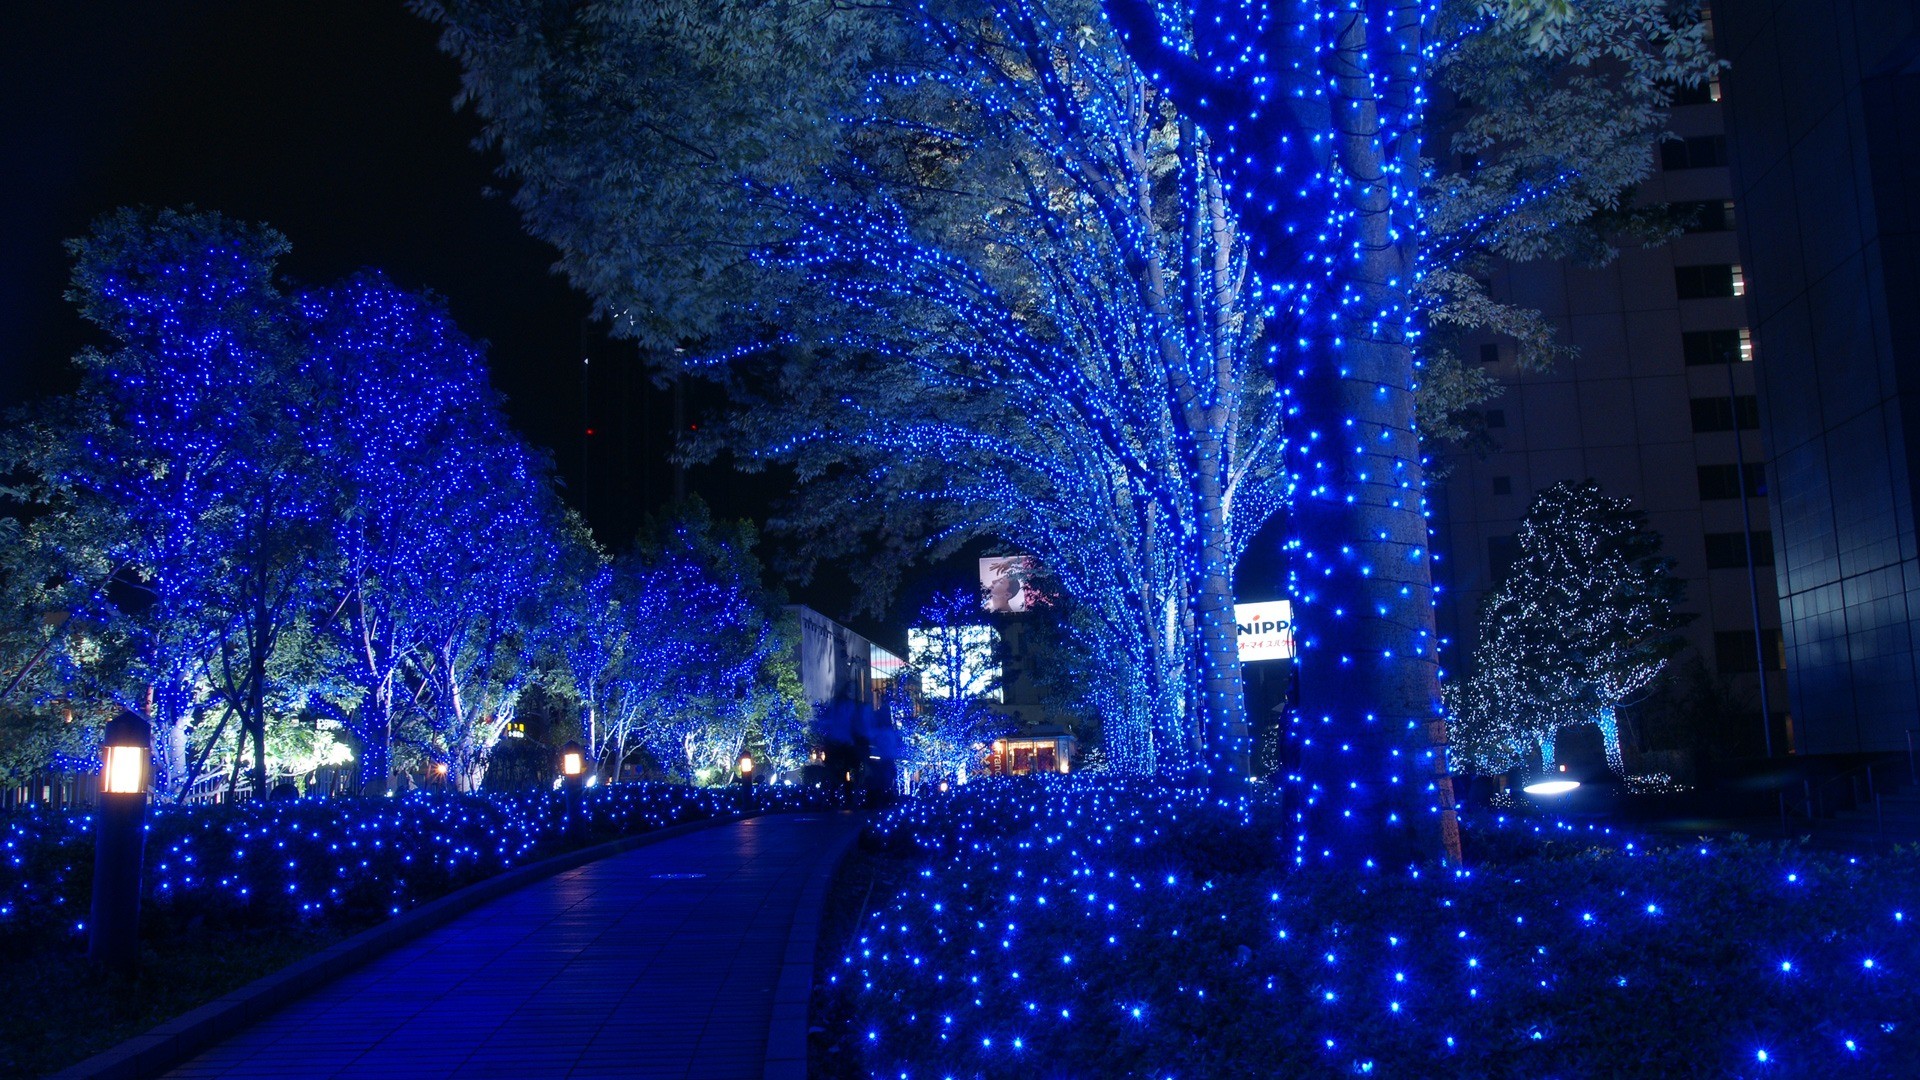 navidad fondos de pantalla hd 1920x1080,azul,luces de navidad,decoración navideña,encendiendo,azul majorelle